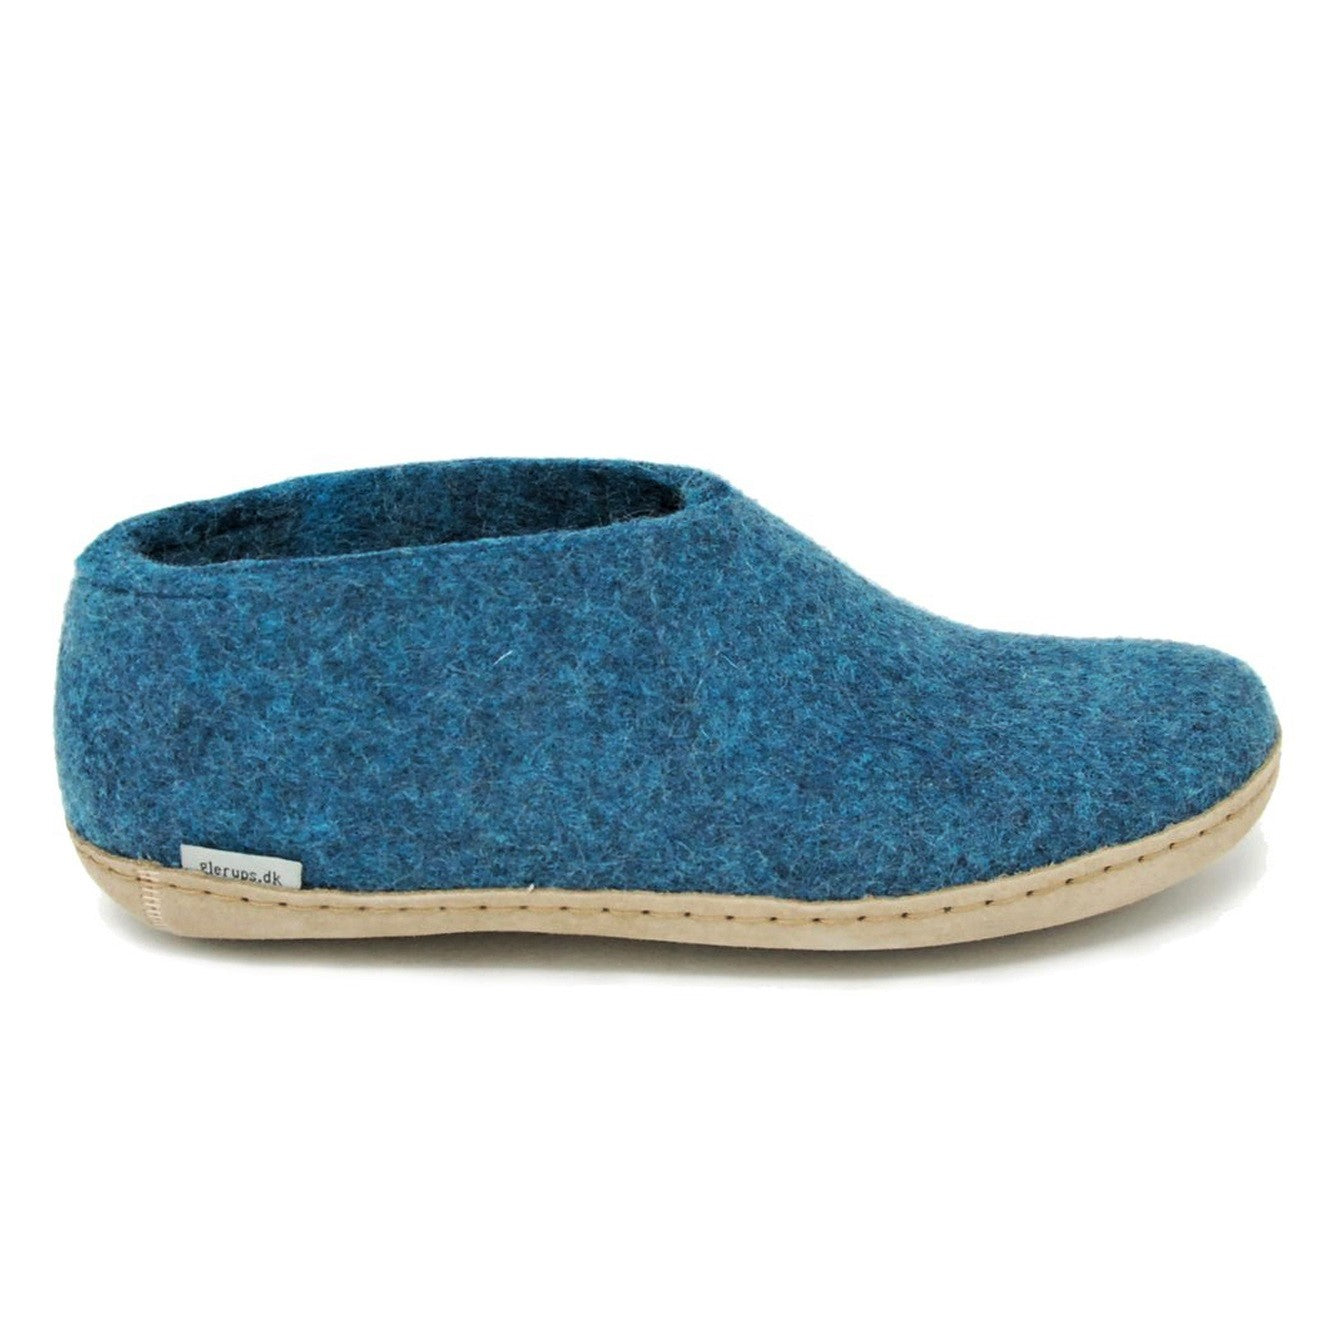 Glerups slipper shoe cut leather sole petrol teal blue